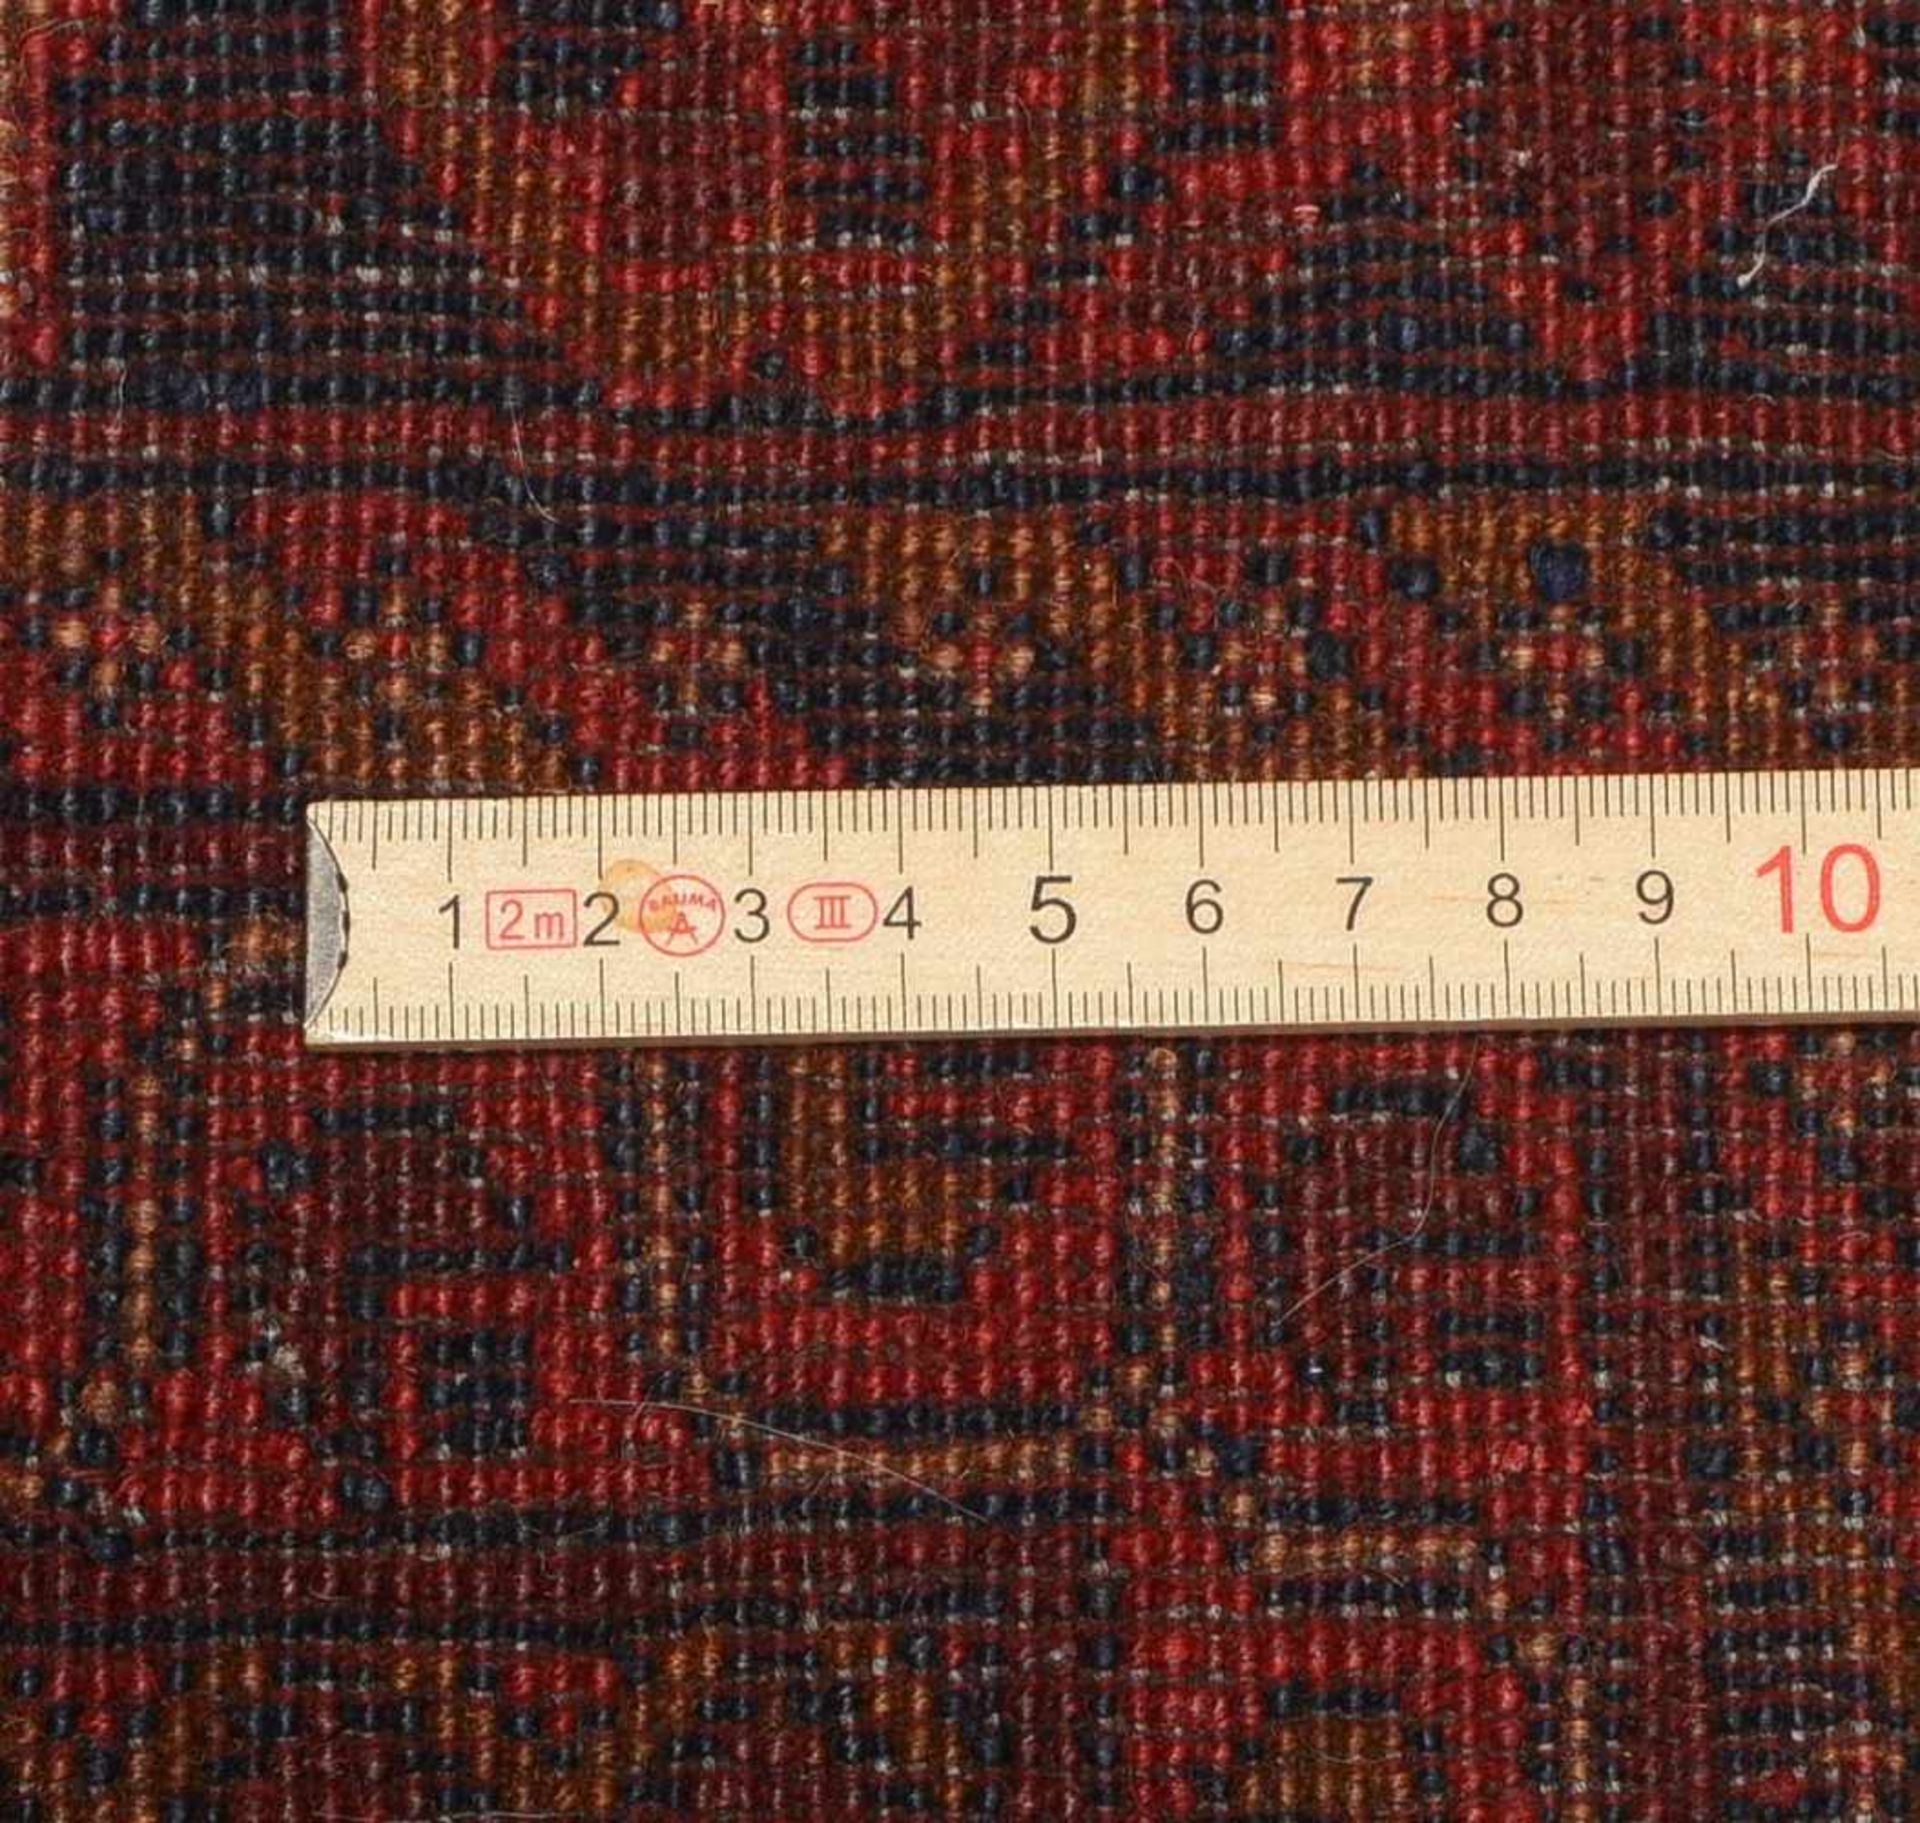 Orientteppich, ringsum komplett, Flor in gutem Zustand; Maße 196 x 129 cm - Bild 2 aus 3